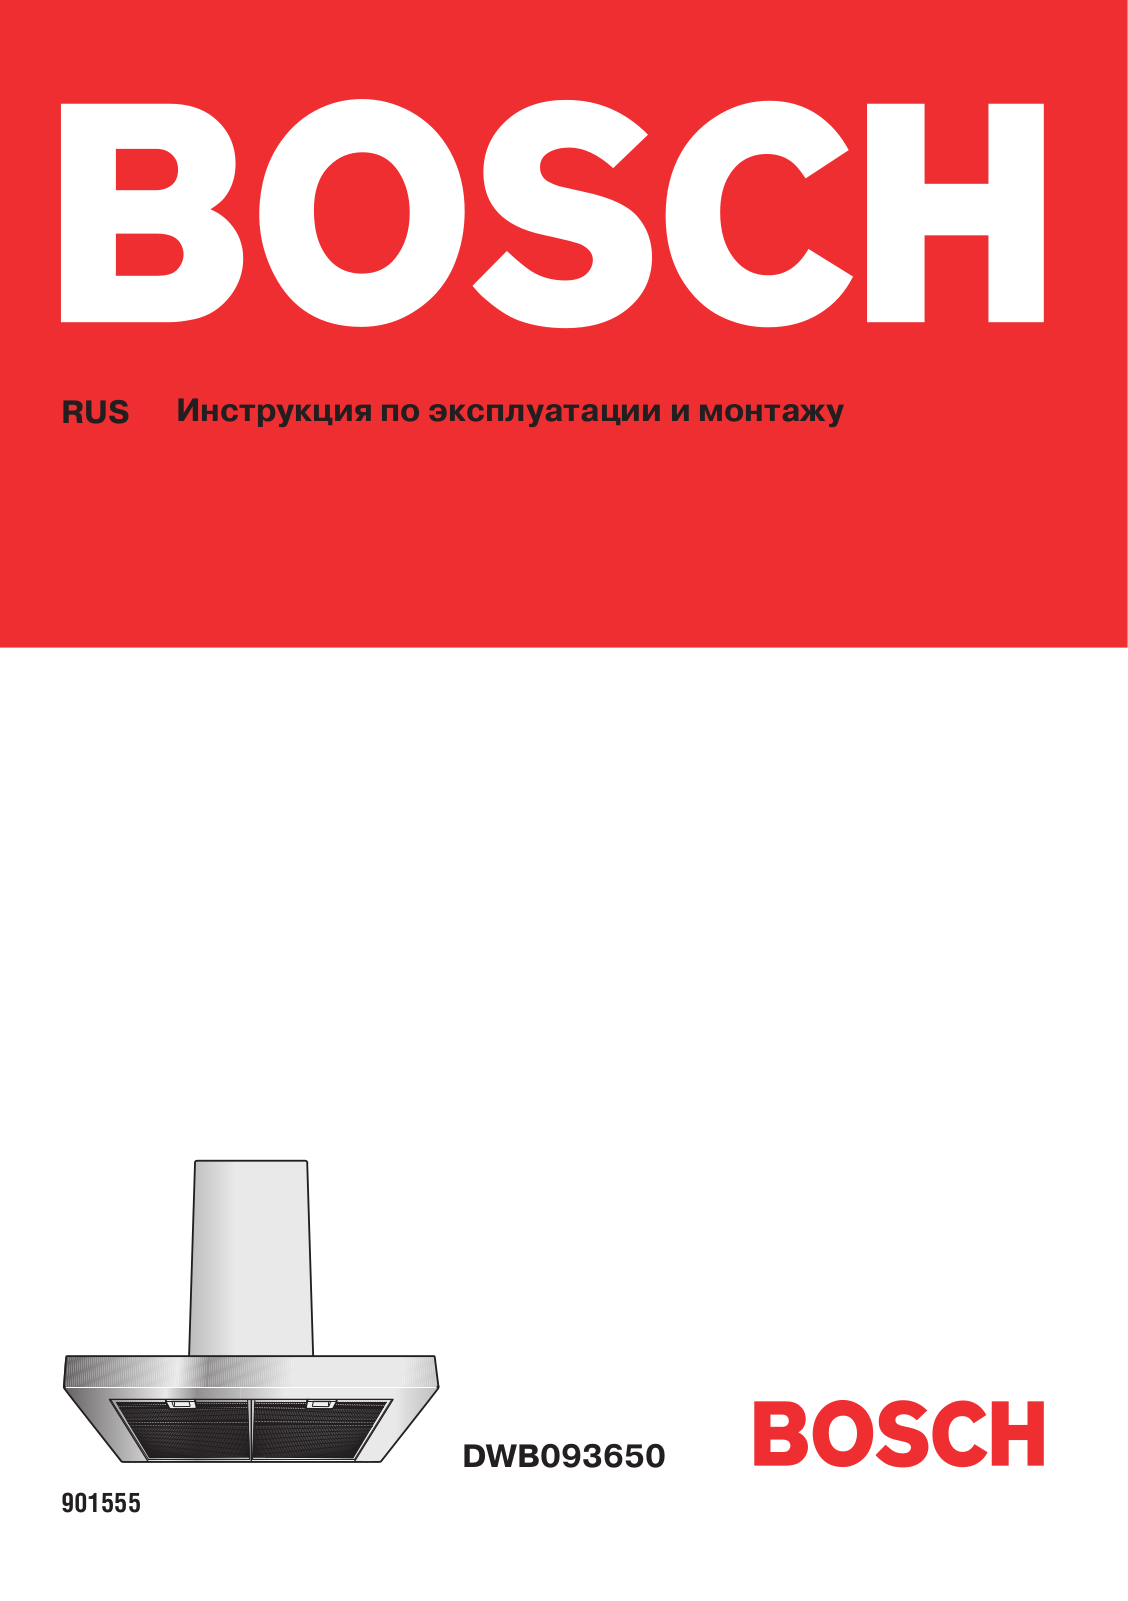 Bosch DWB093650 User Manual